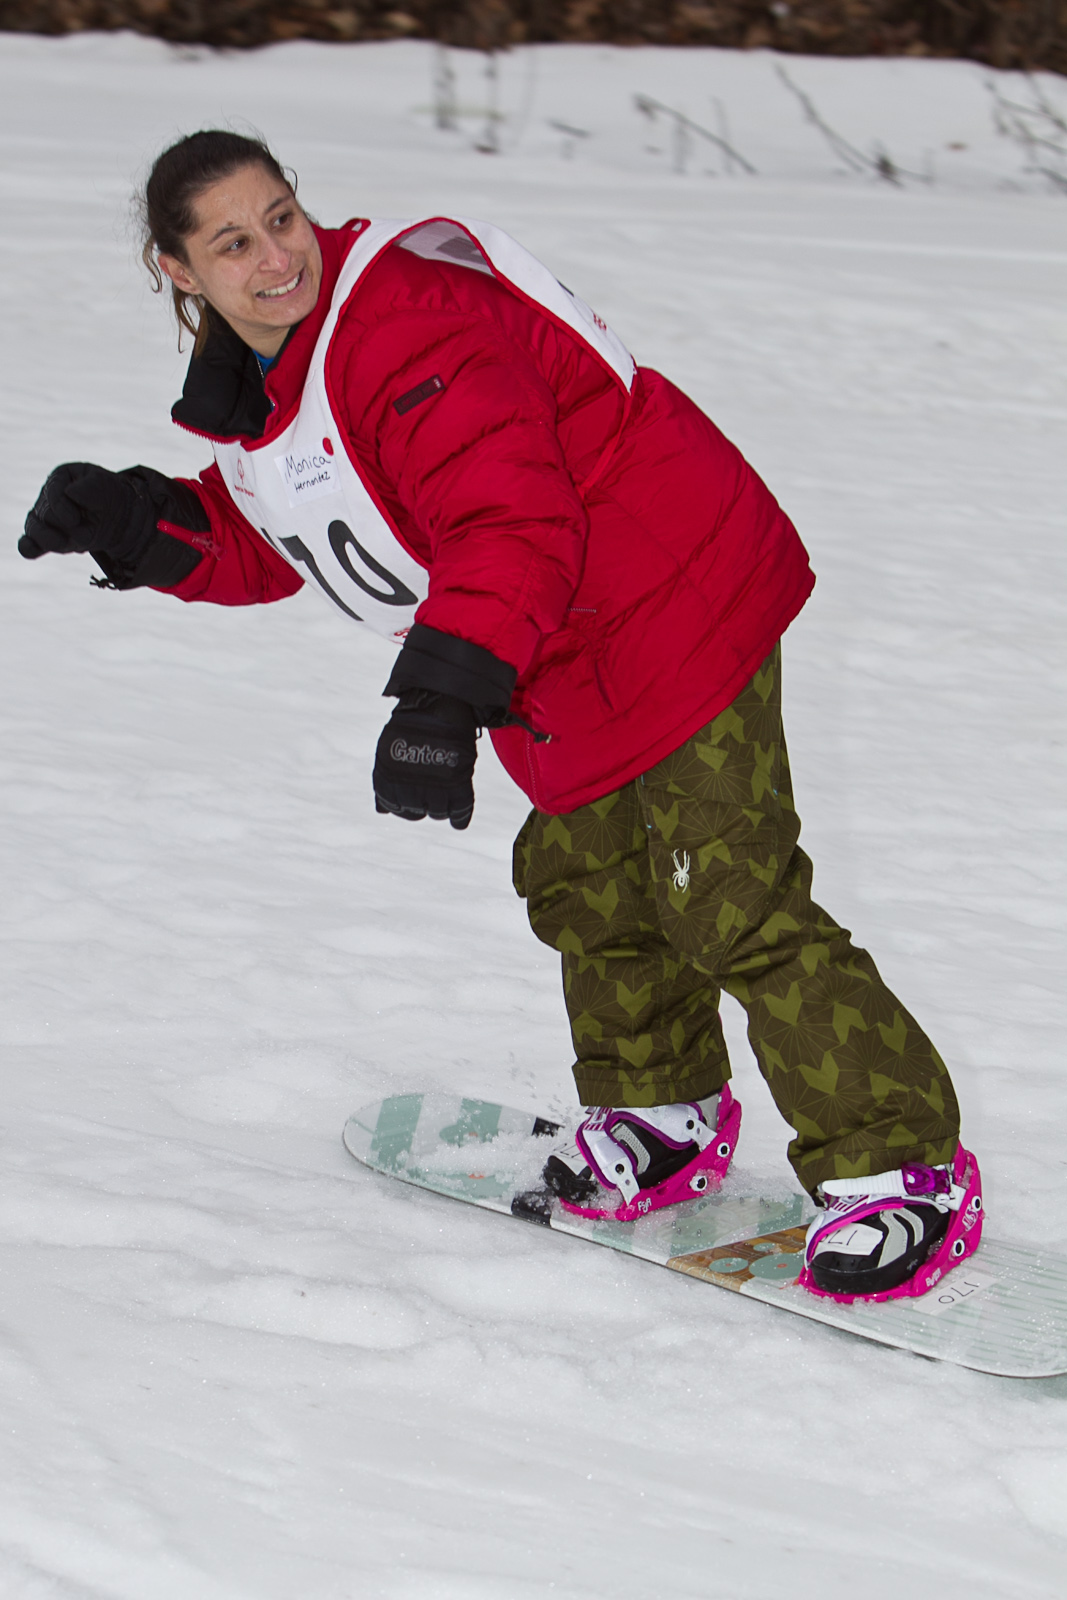 ./2012/Snowboarding/Monica snowboarding.jpg